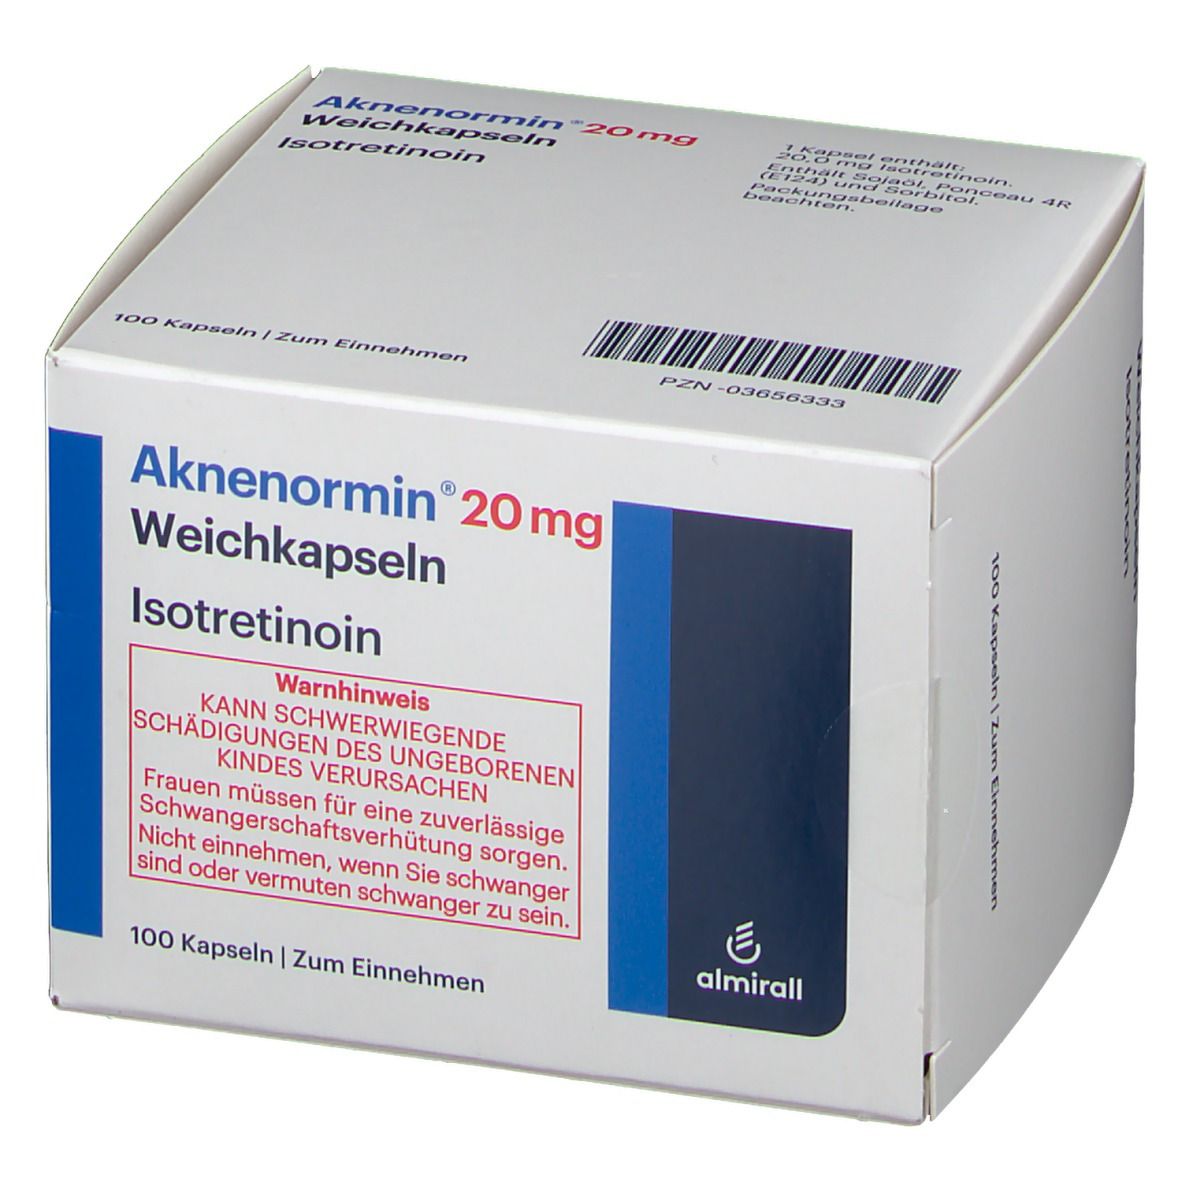 Aknenormin® 20 mg